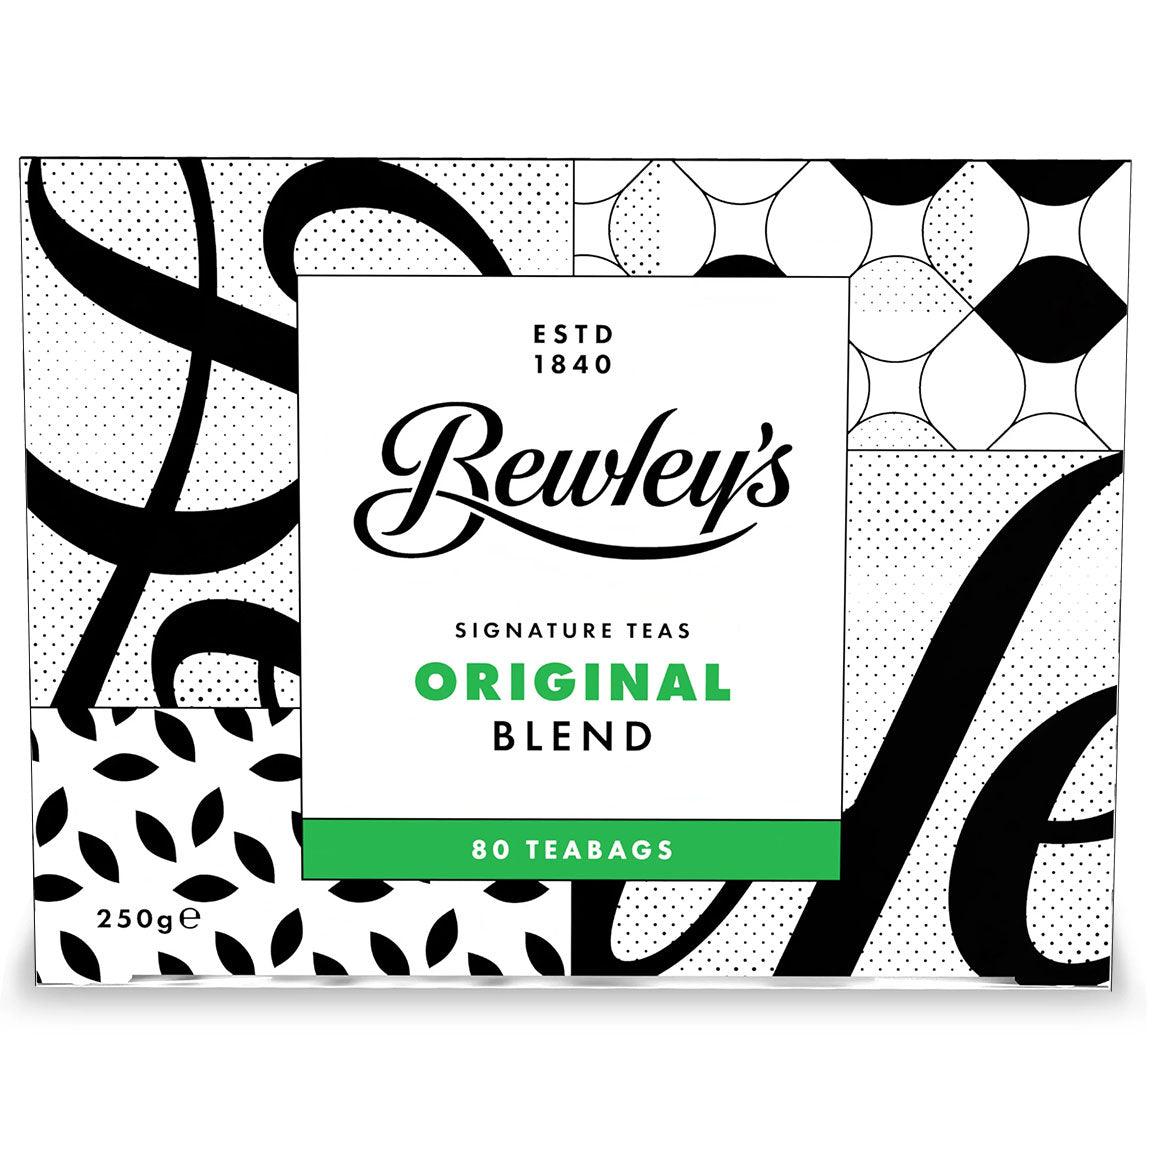 Bewleys Original Blend Tea Bags